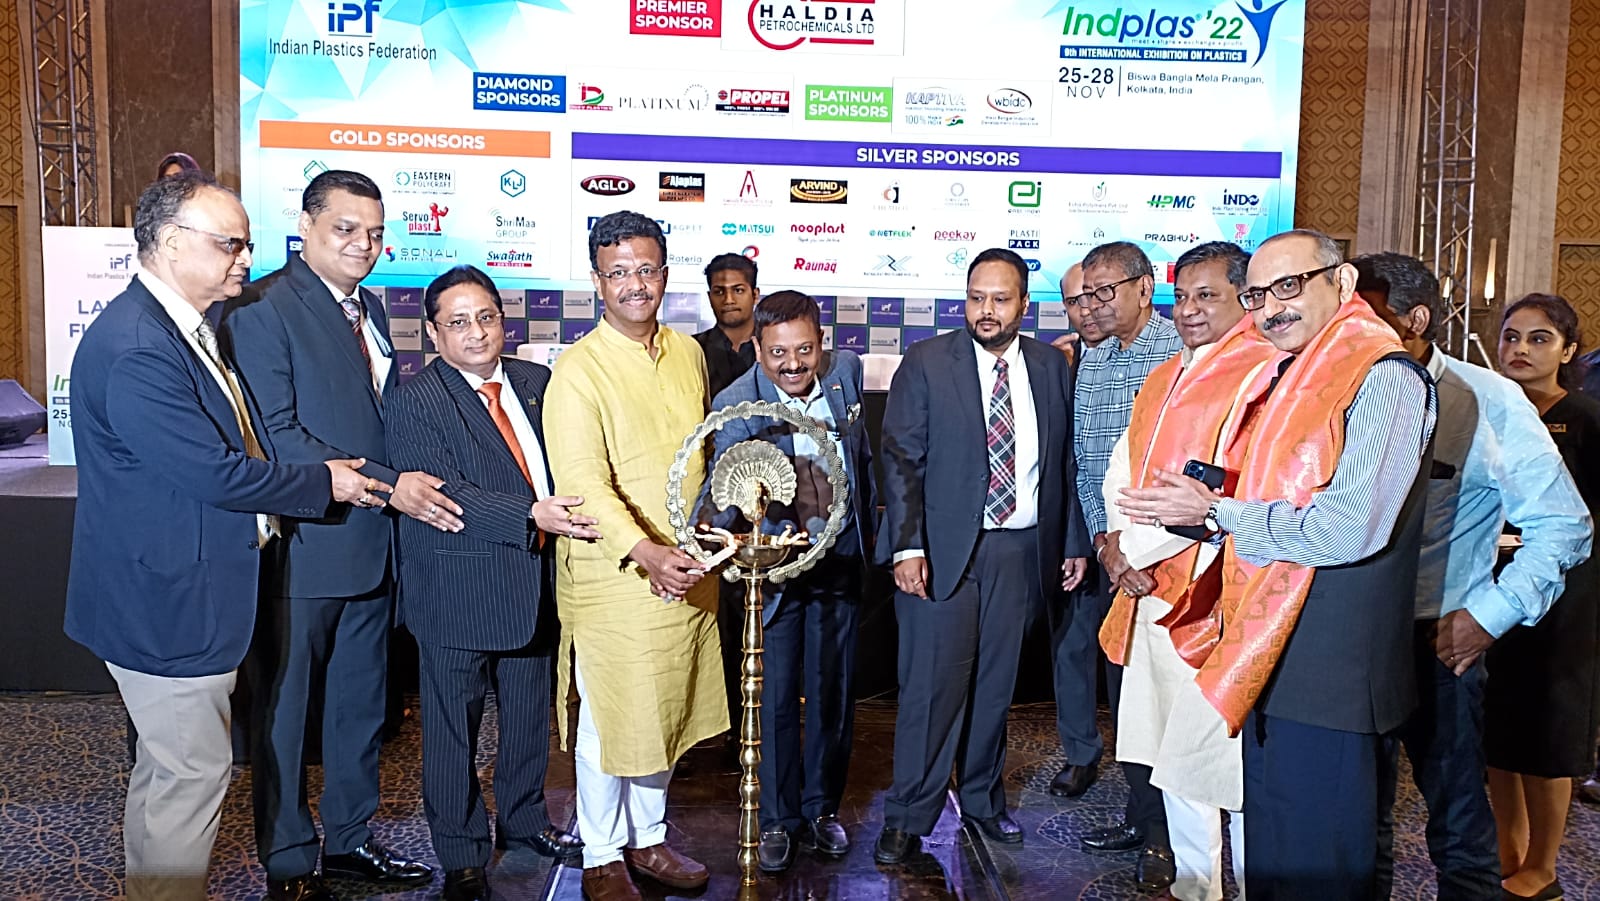 Indian Plastics Federation Presents India’s leading & Eastern India’s largest International Plastics Exhibition “INDPLAS’22”